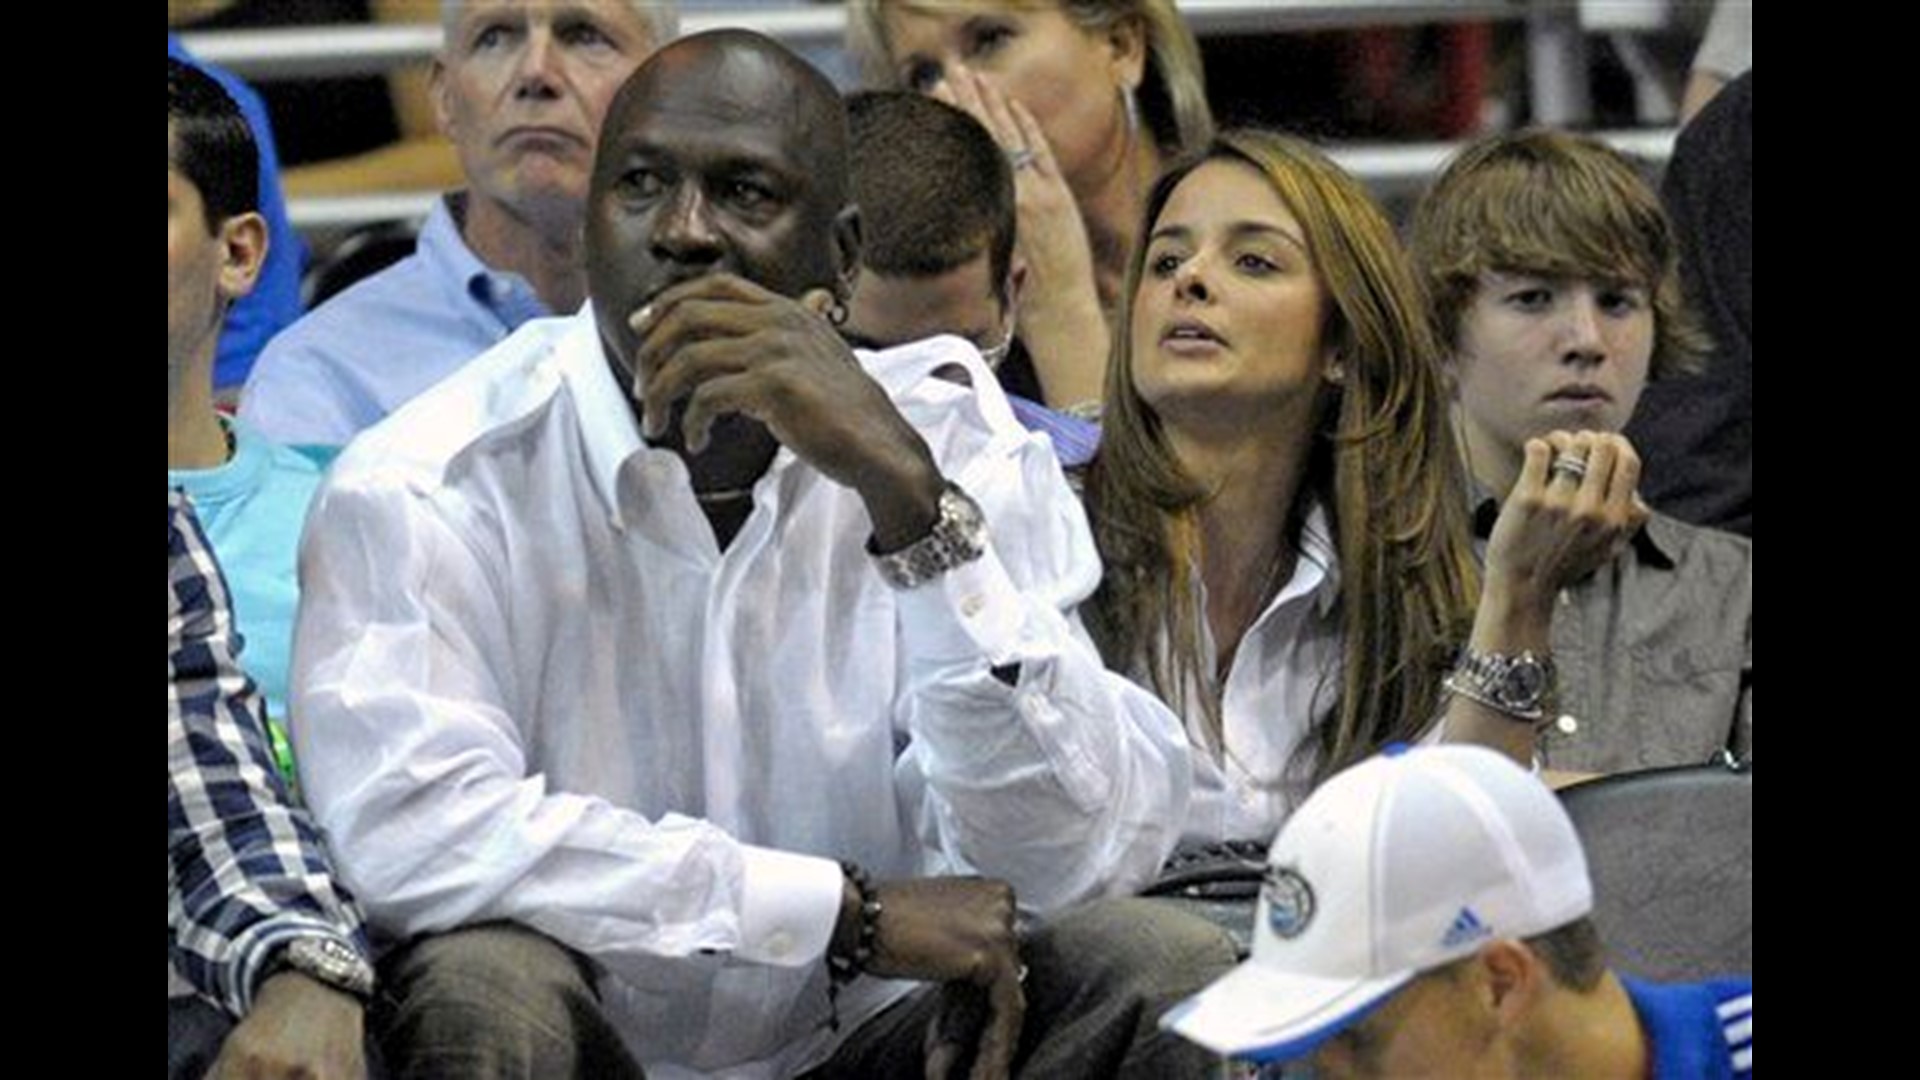 Michael Jordan Engaged To Model Yvette Prieto